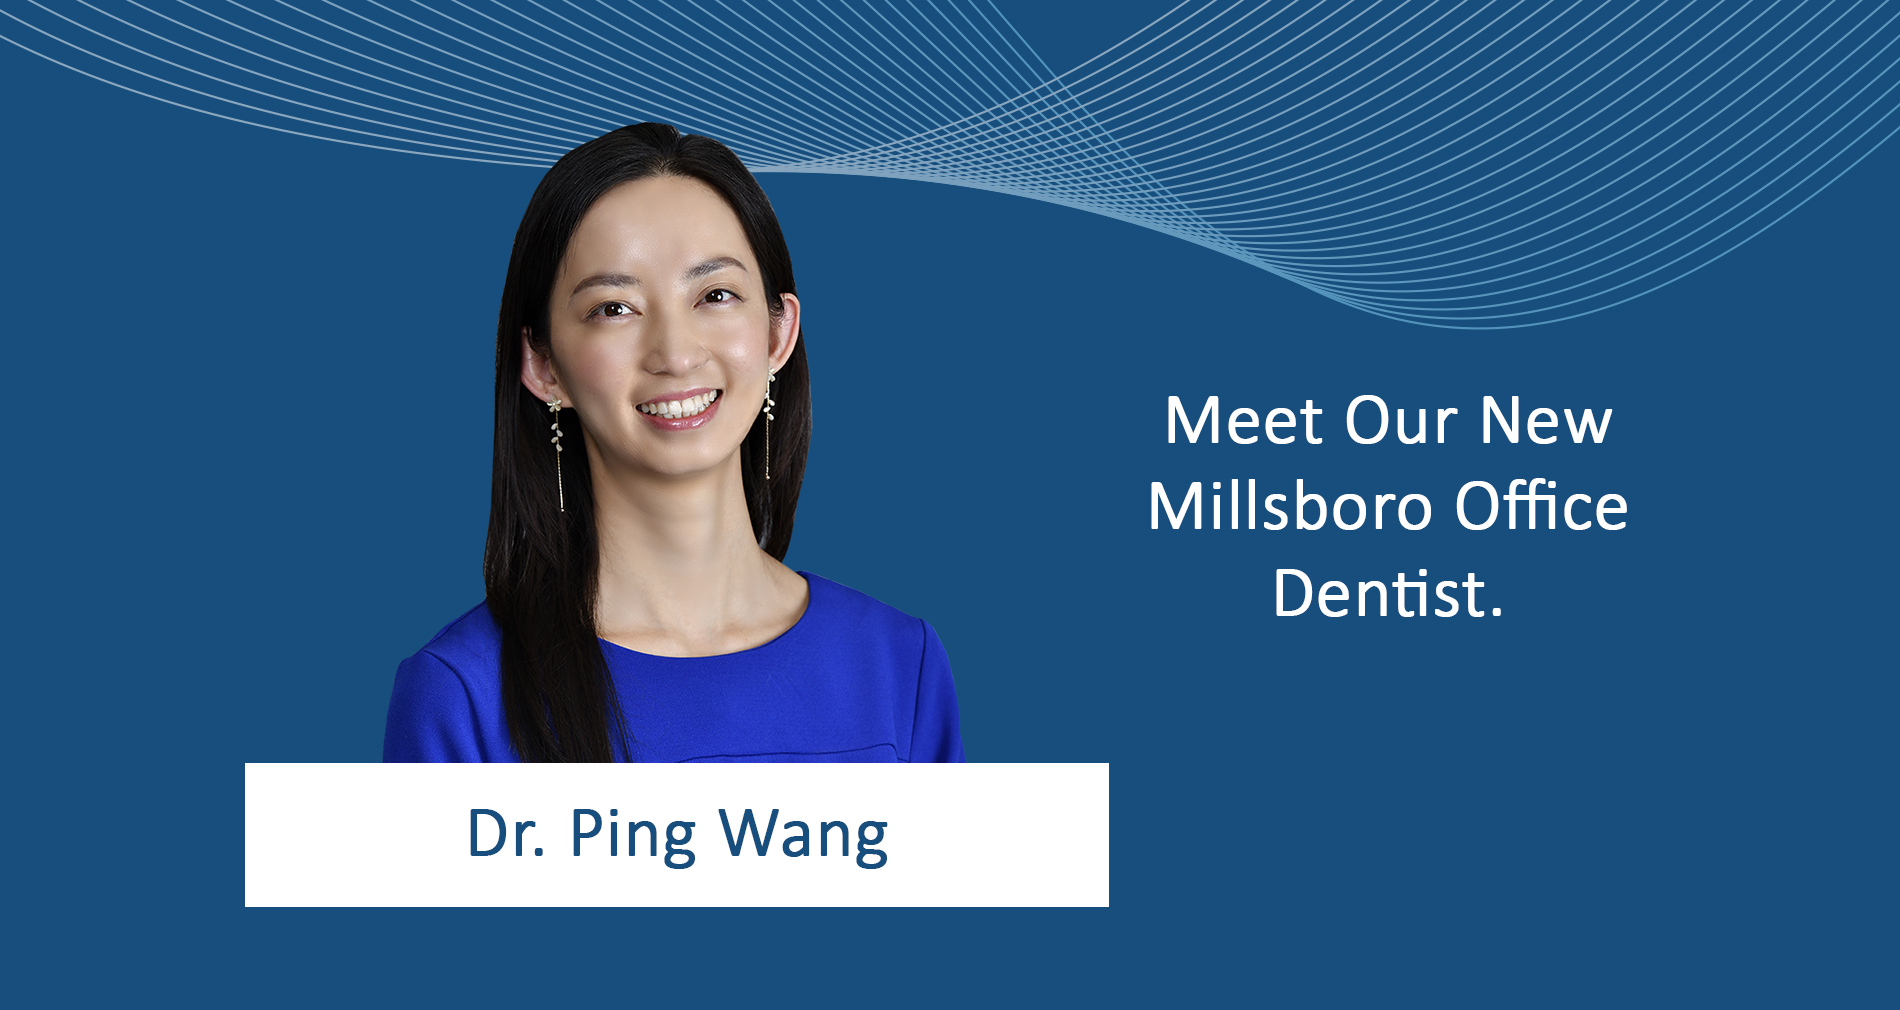 Dr. Ping Wang, New Millsboro Dentist